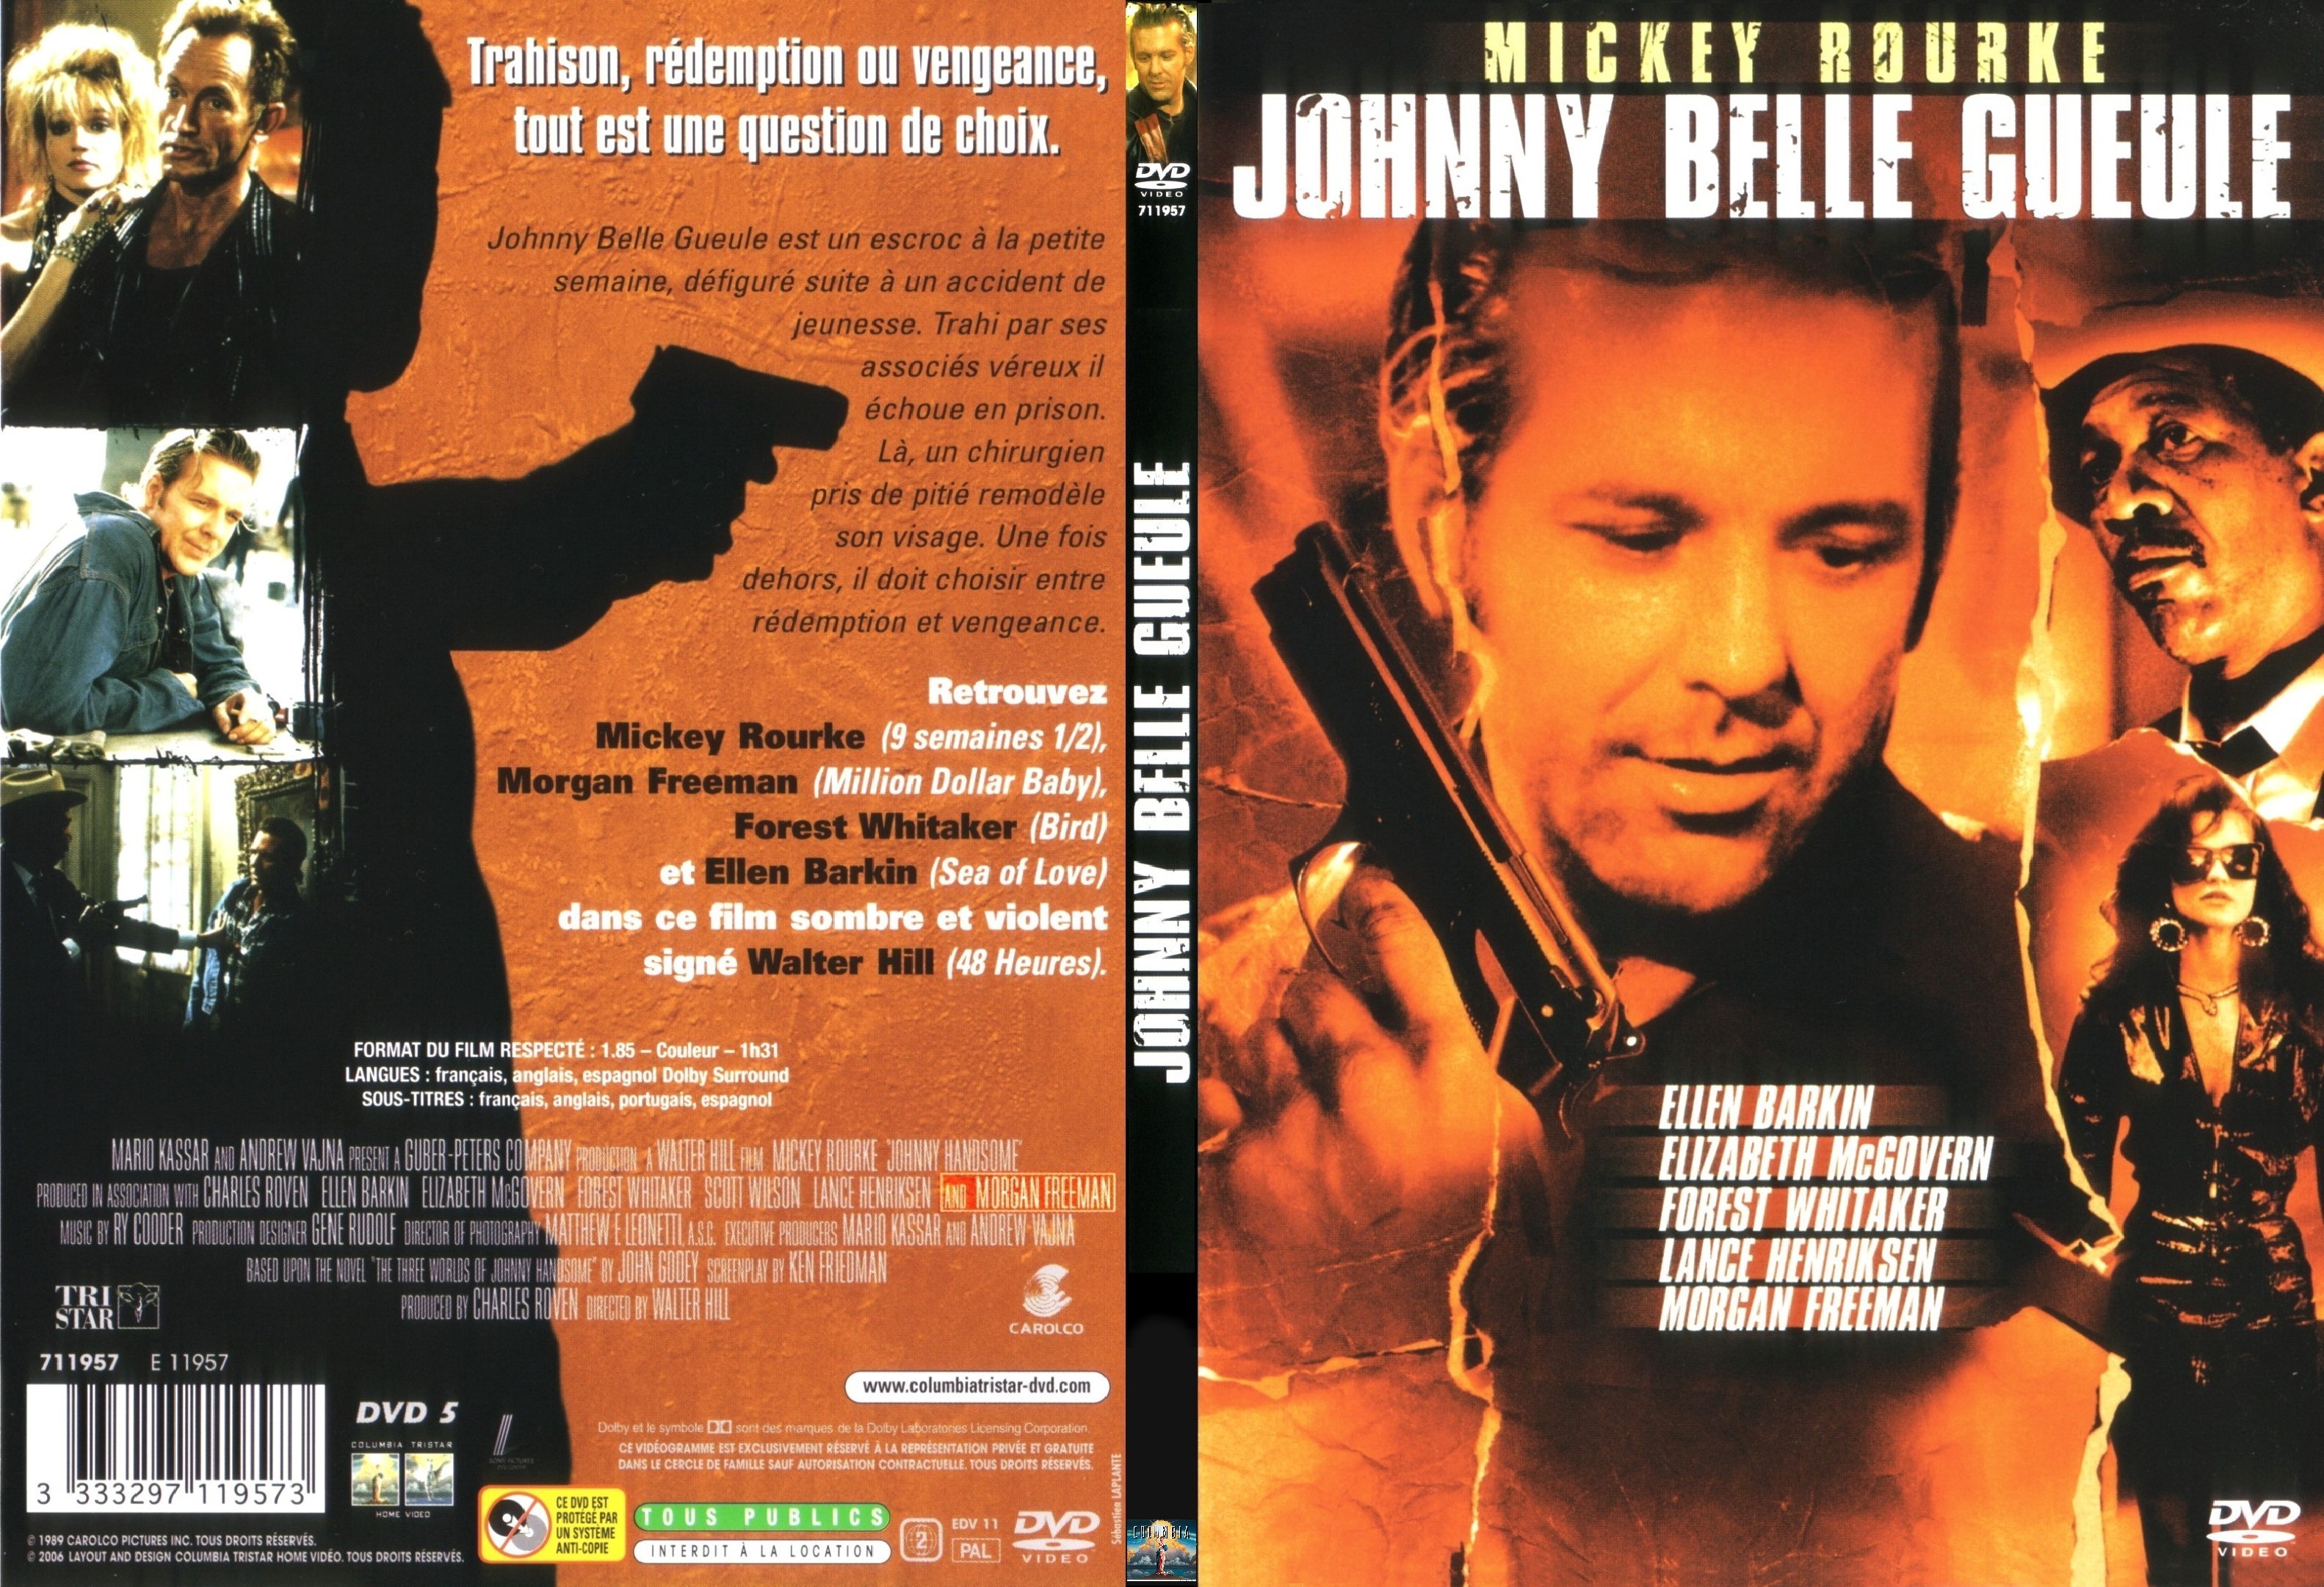 Jaquette DVD Johnny belle gueule - SLIM